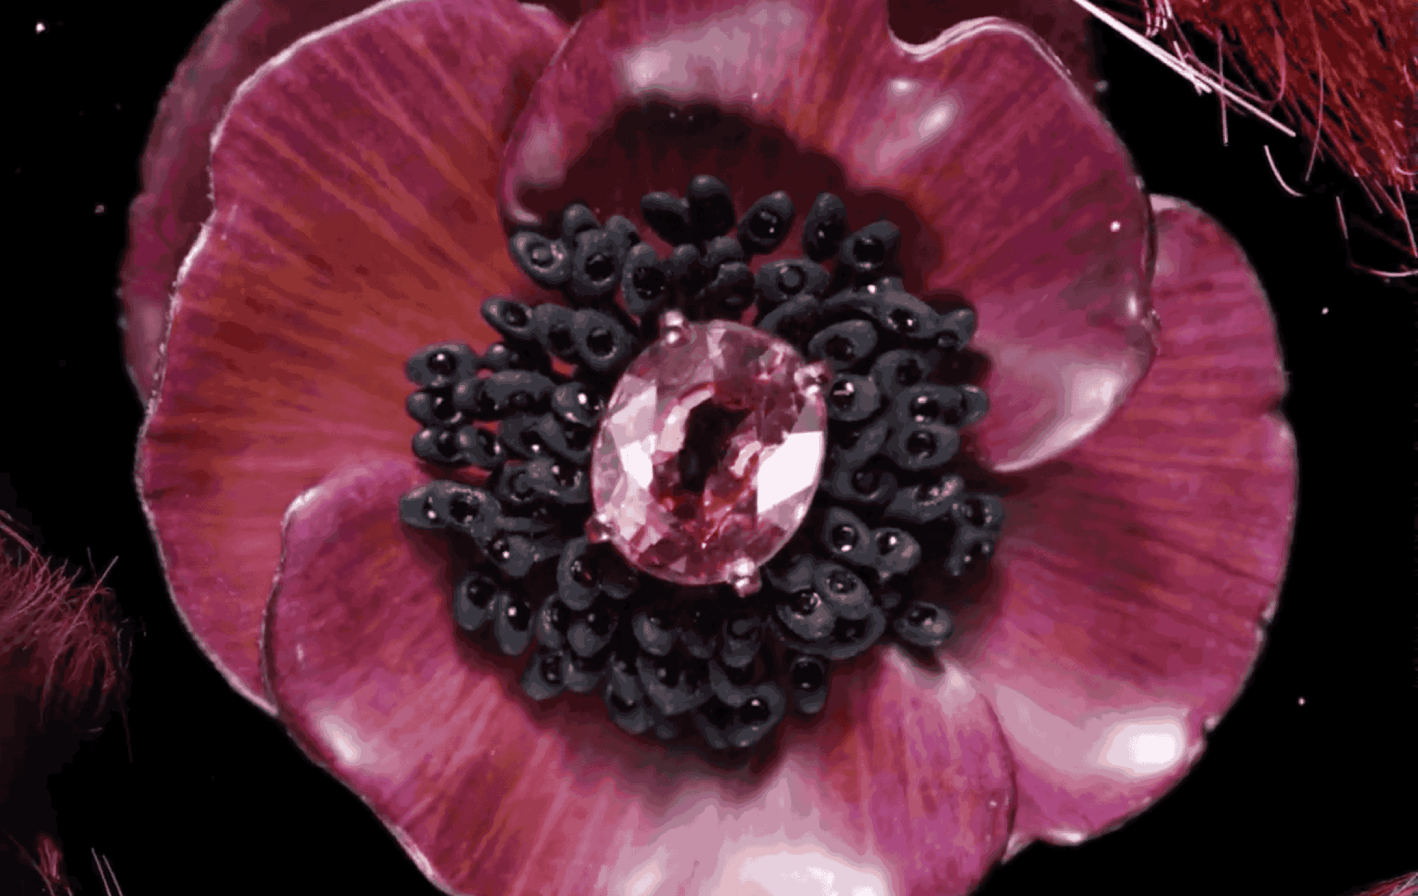 Close-up image of the Fleur éternelle ring